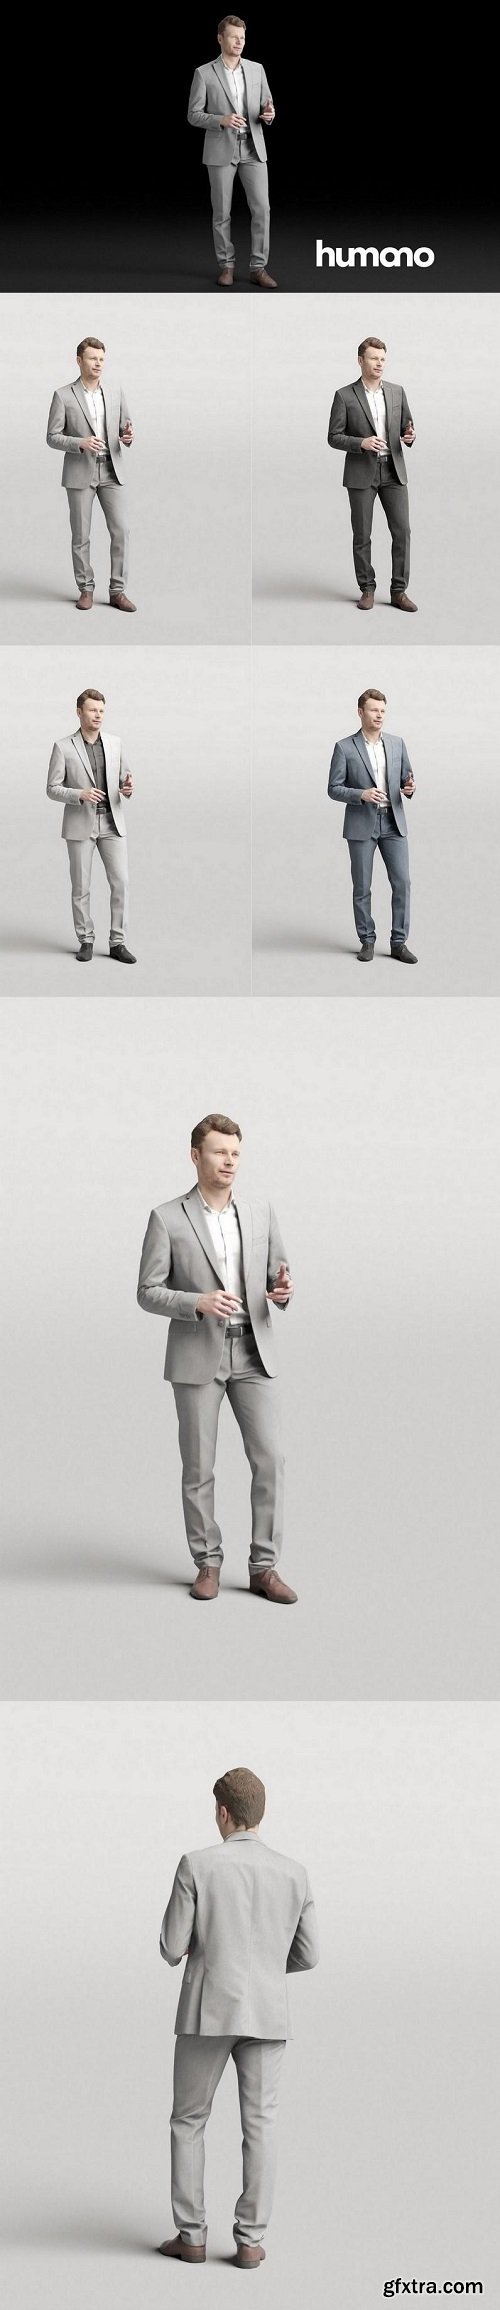 Elegant man in suit standing and talking 0313 3D model